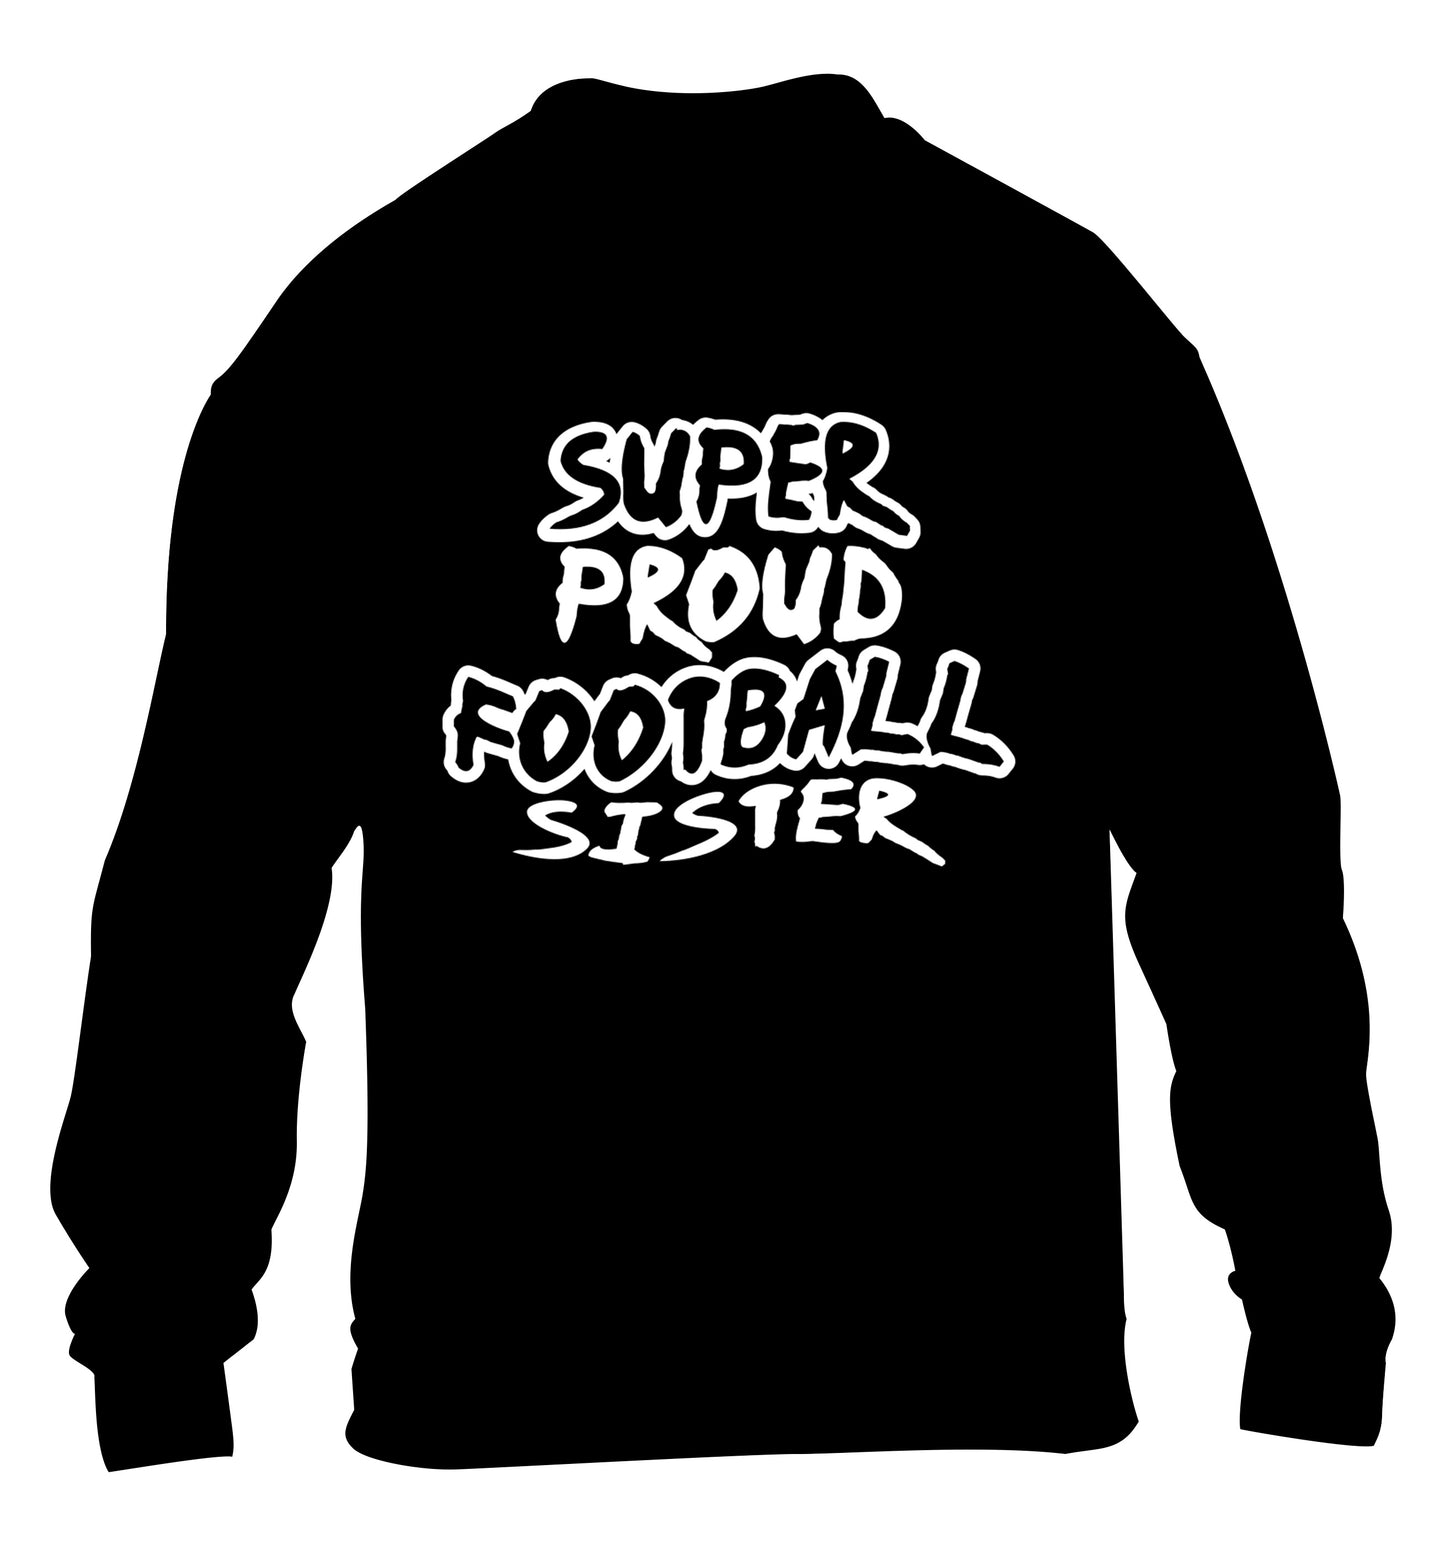 Super proud football sister children's black sweater 12-14 Years